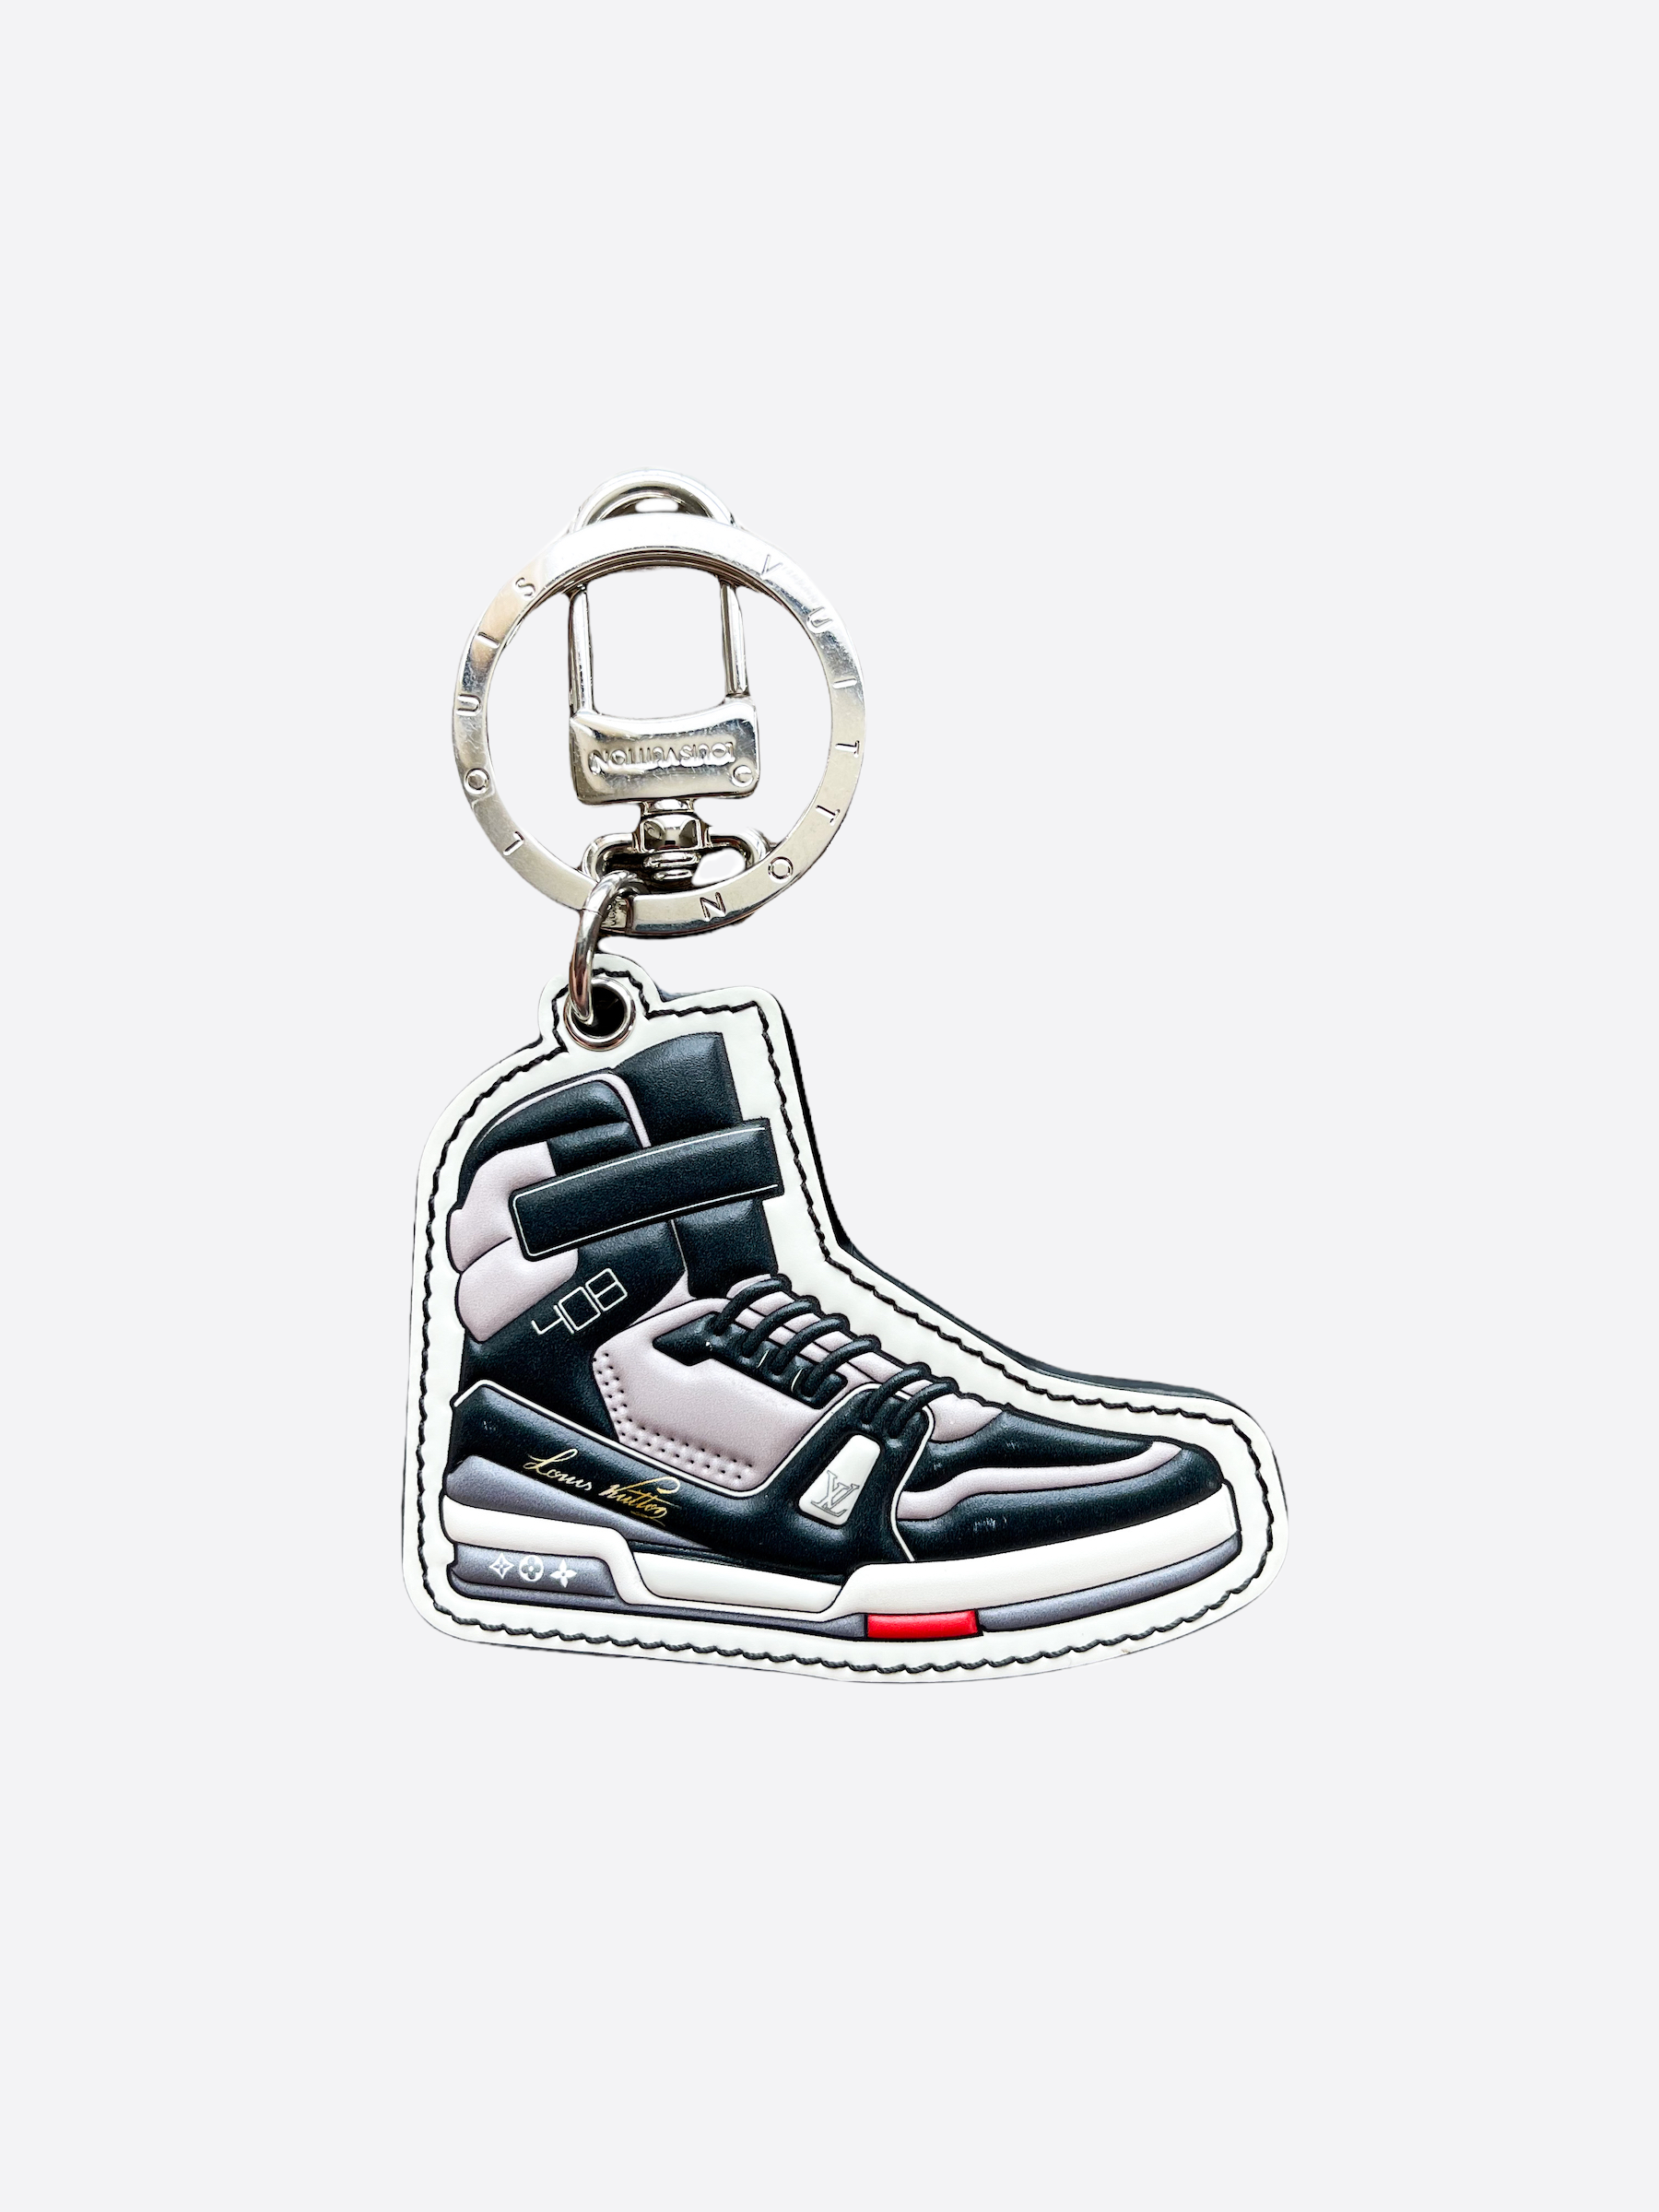 louis vuitton shoe jordan one keychain